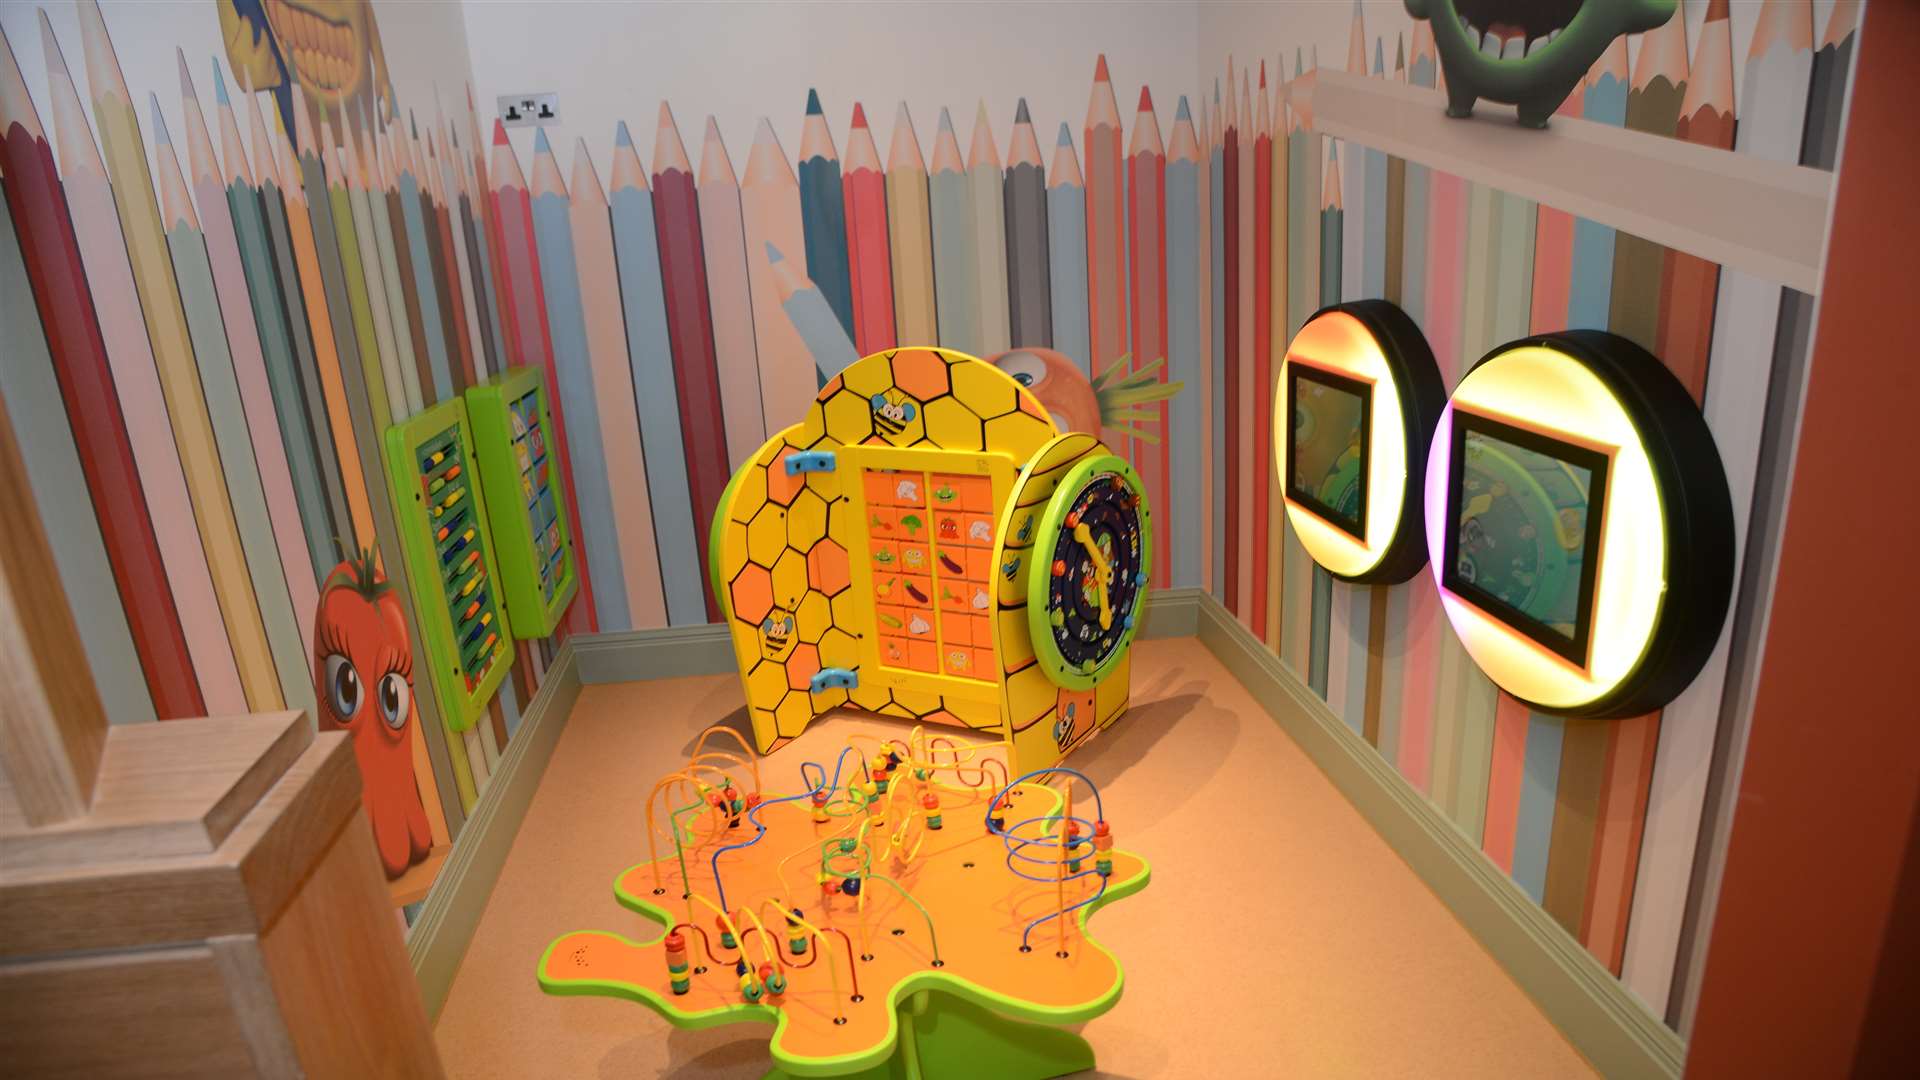 The high-tech children's room